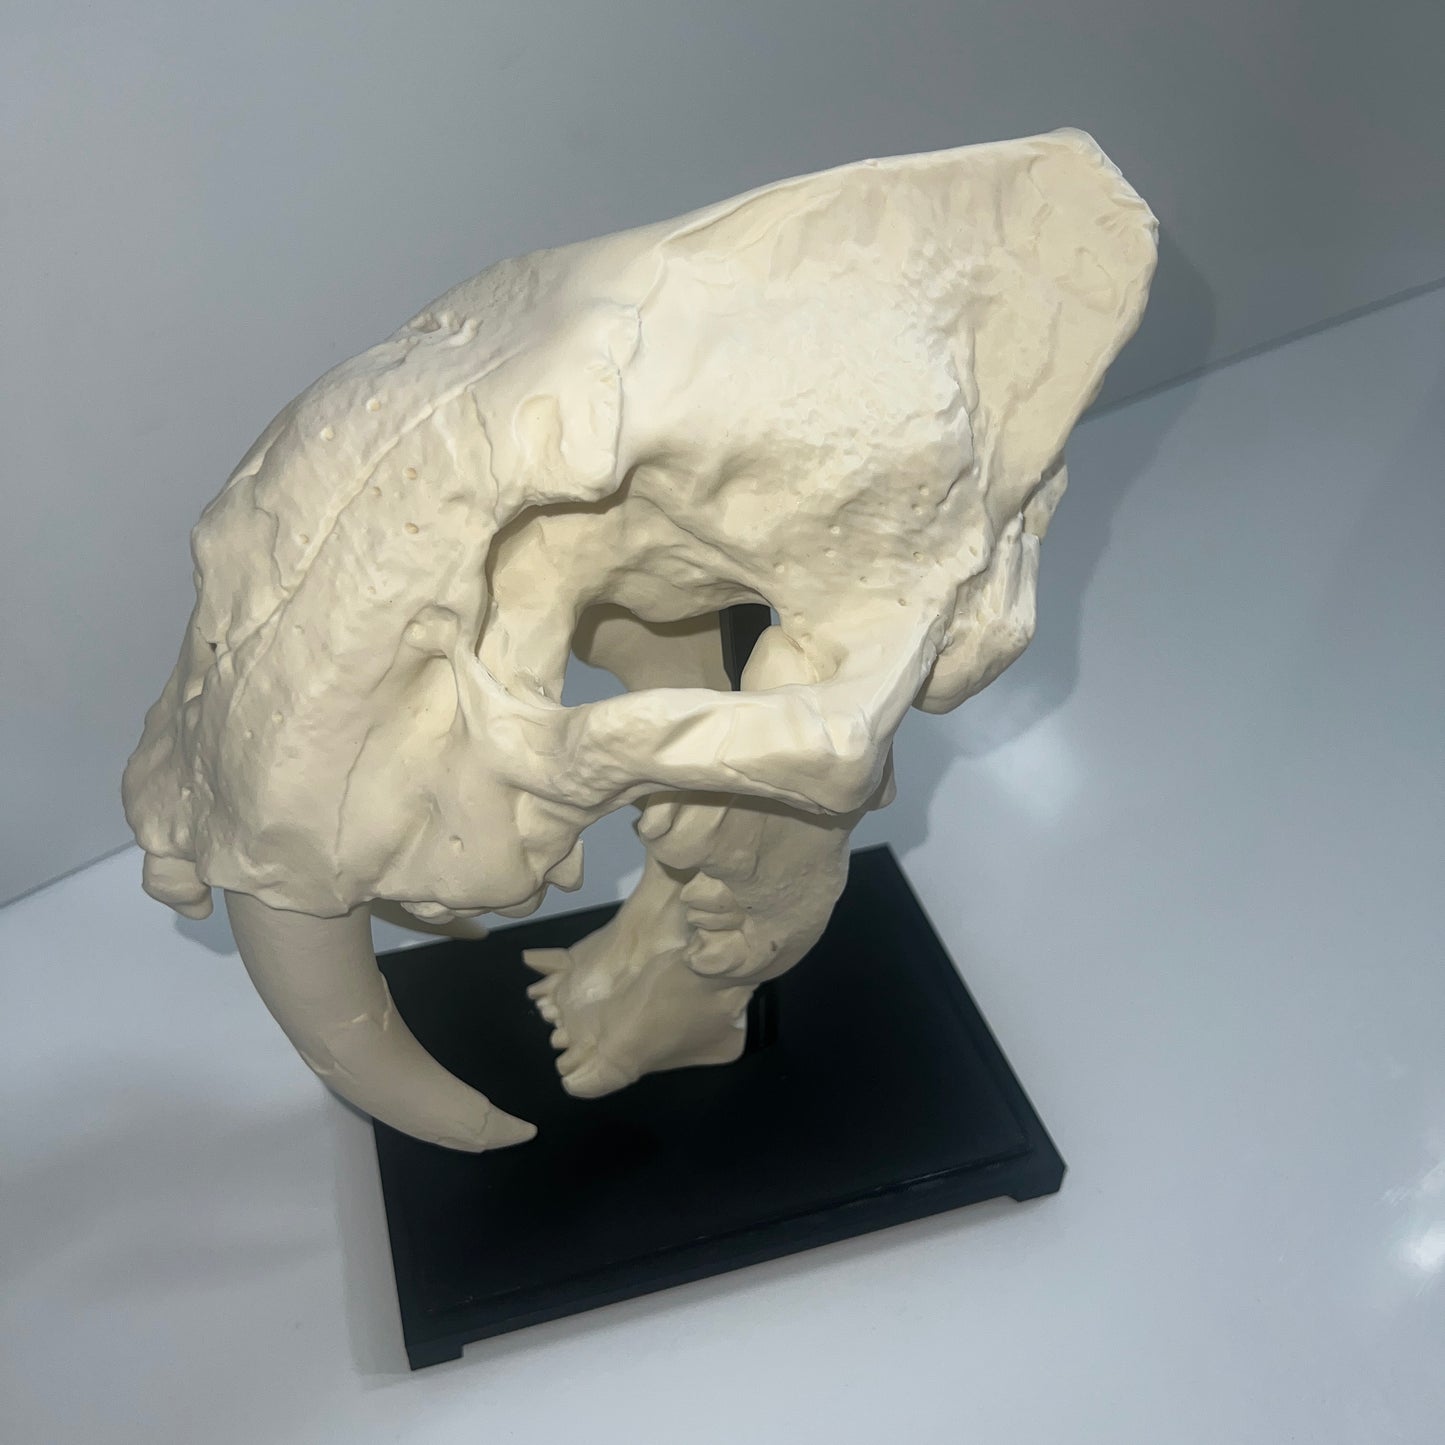 Sabertooth Cat (Smilodon) - 3D Printed